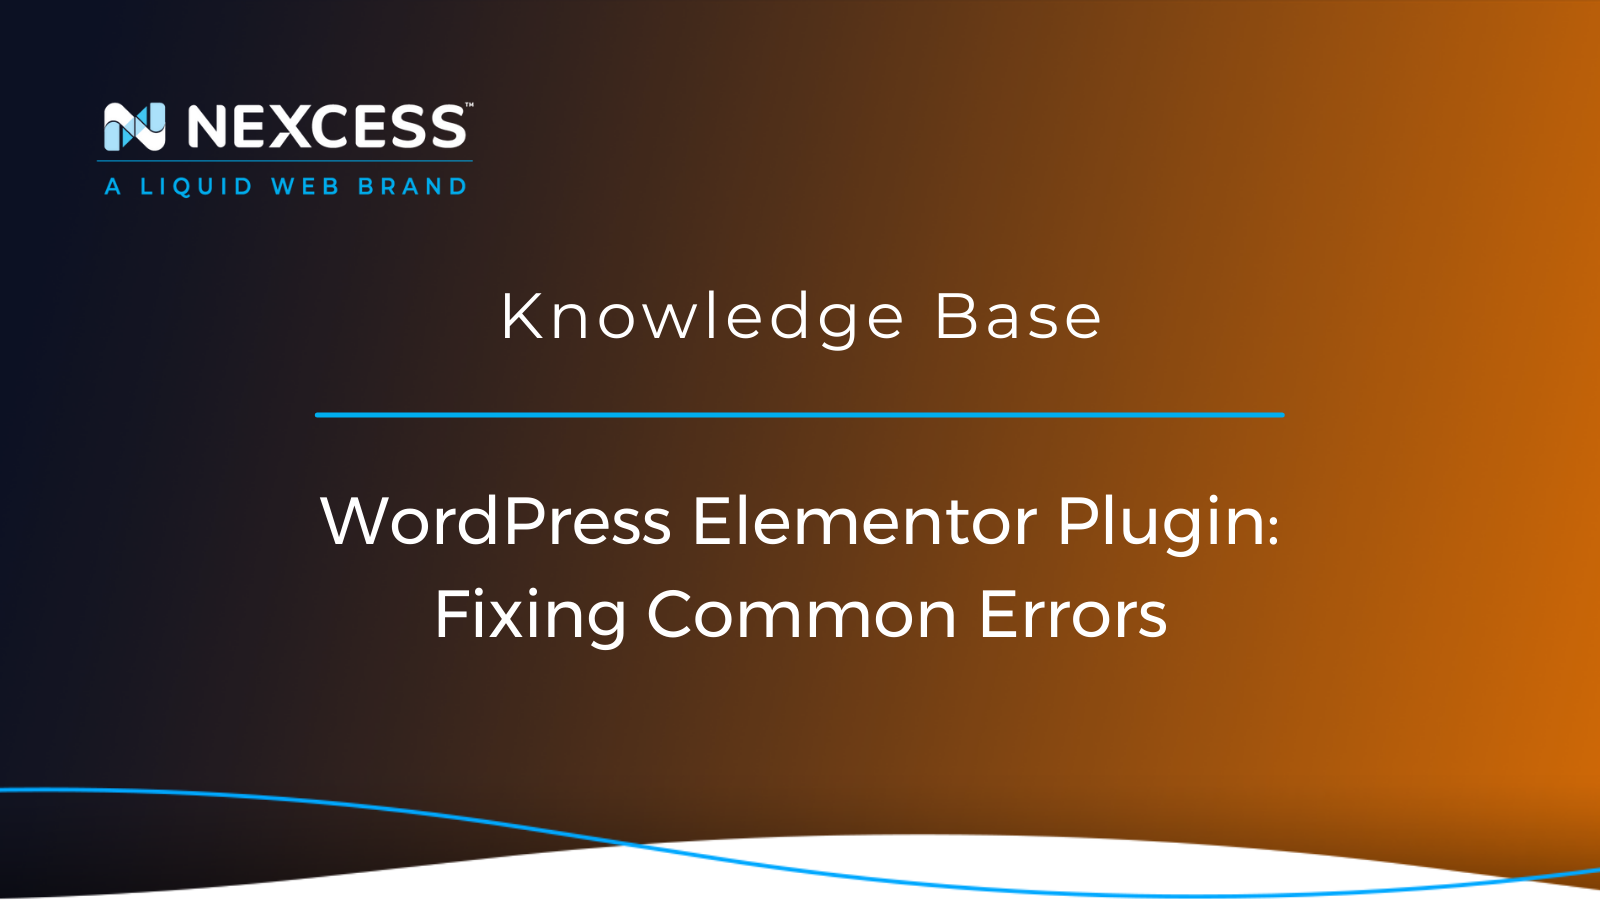 WordPress Elementor Plugin: Fixing Common Errors